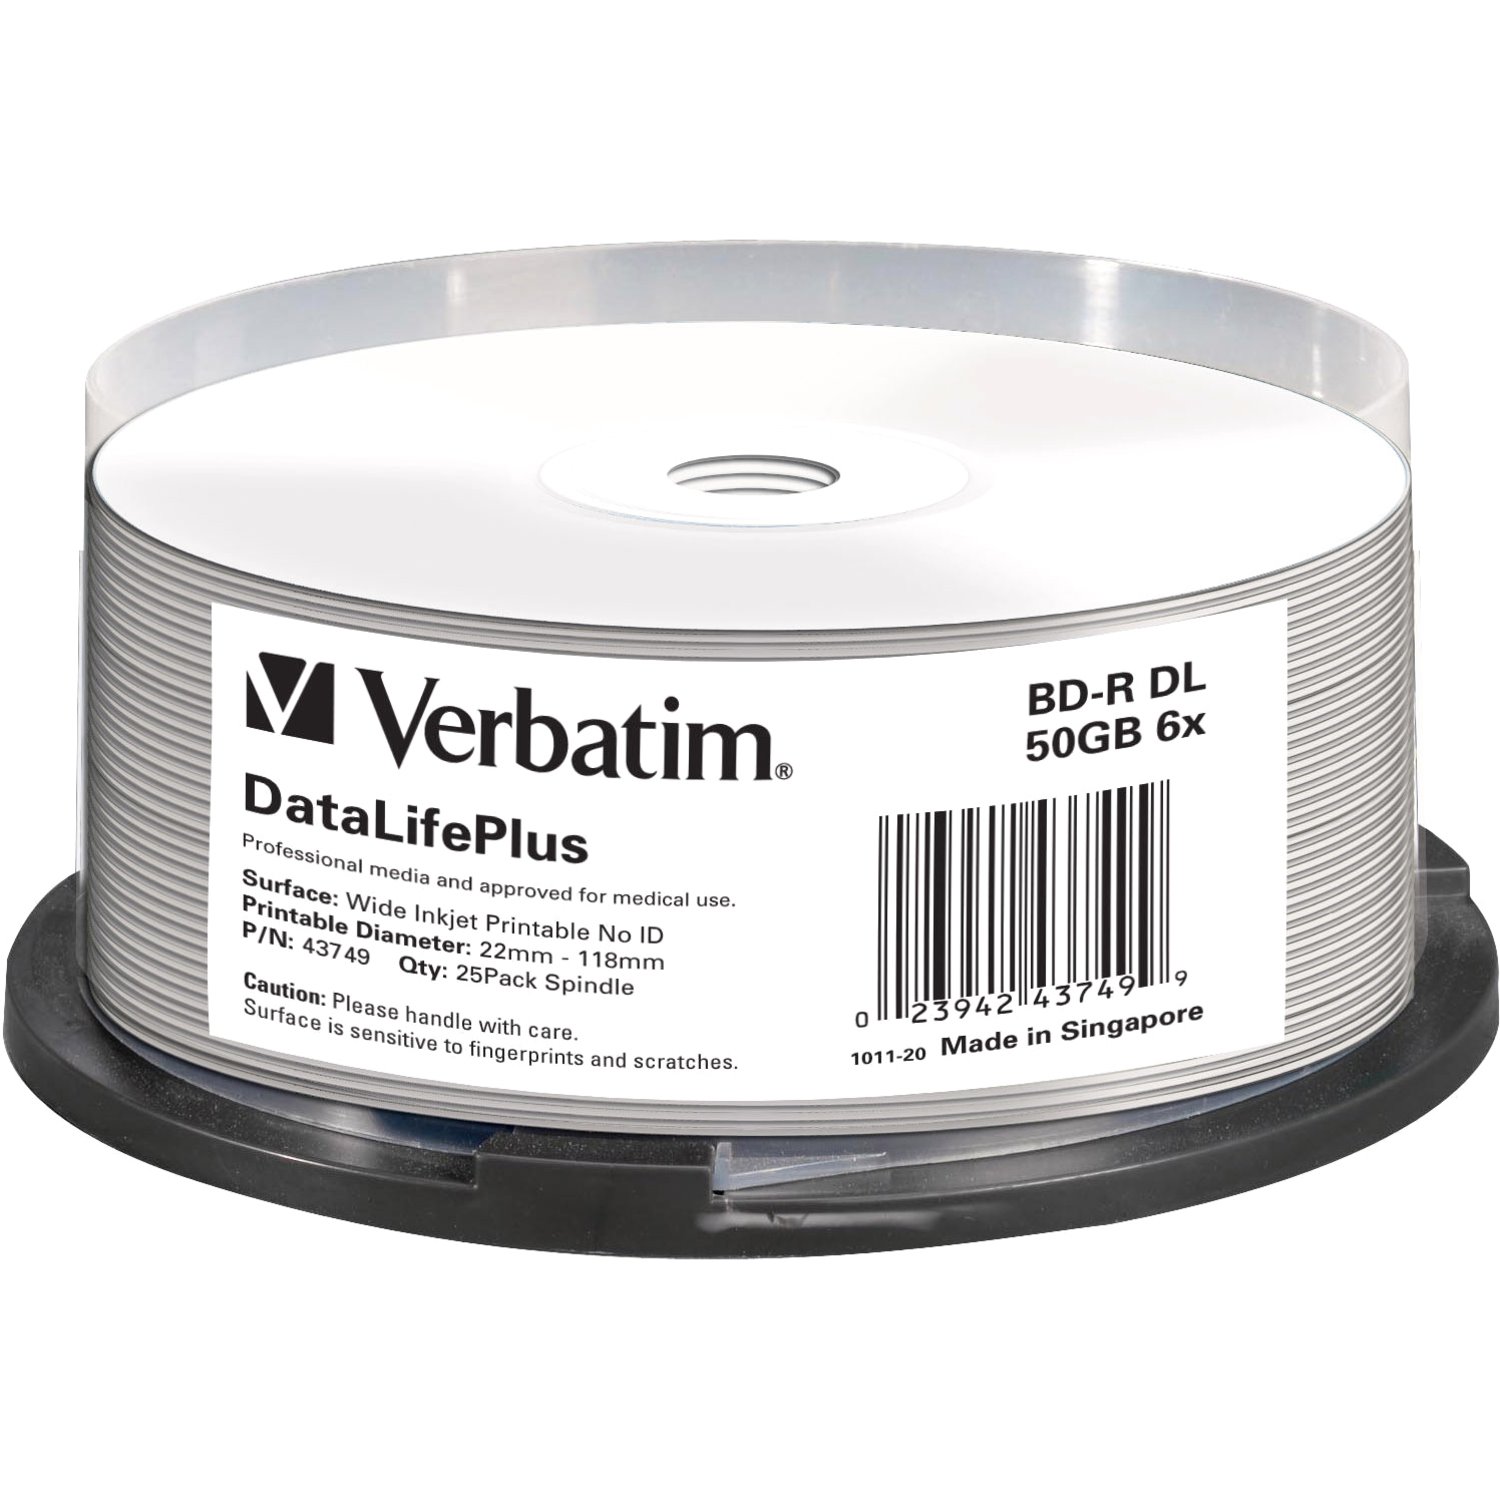 Verbatim DataLifePlus 43749 Blu-ray Recordable Media - BD-R DL - 6x - 50 GB - 25 Pack Spindle